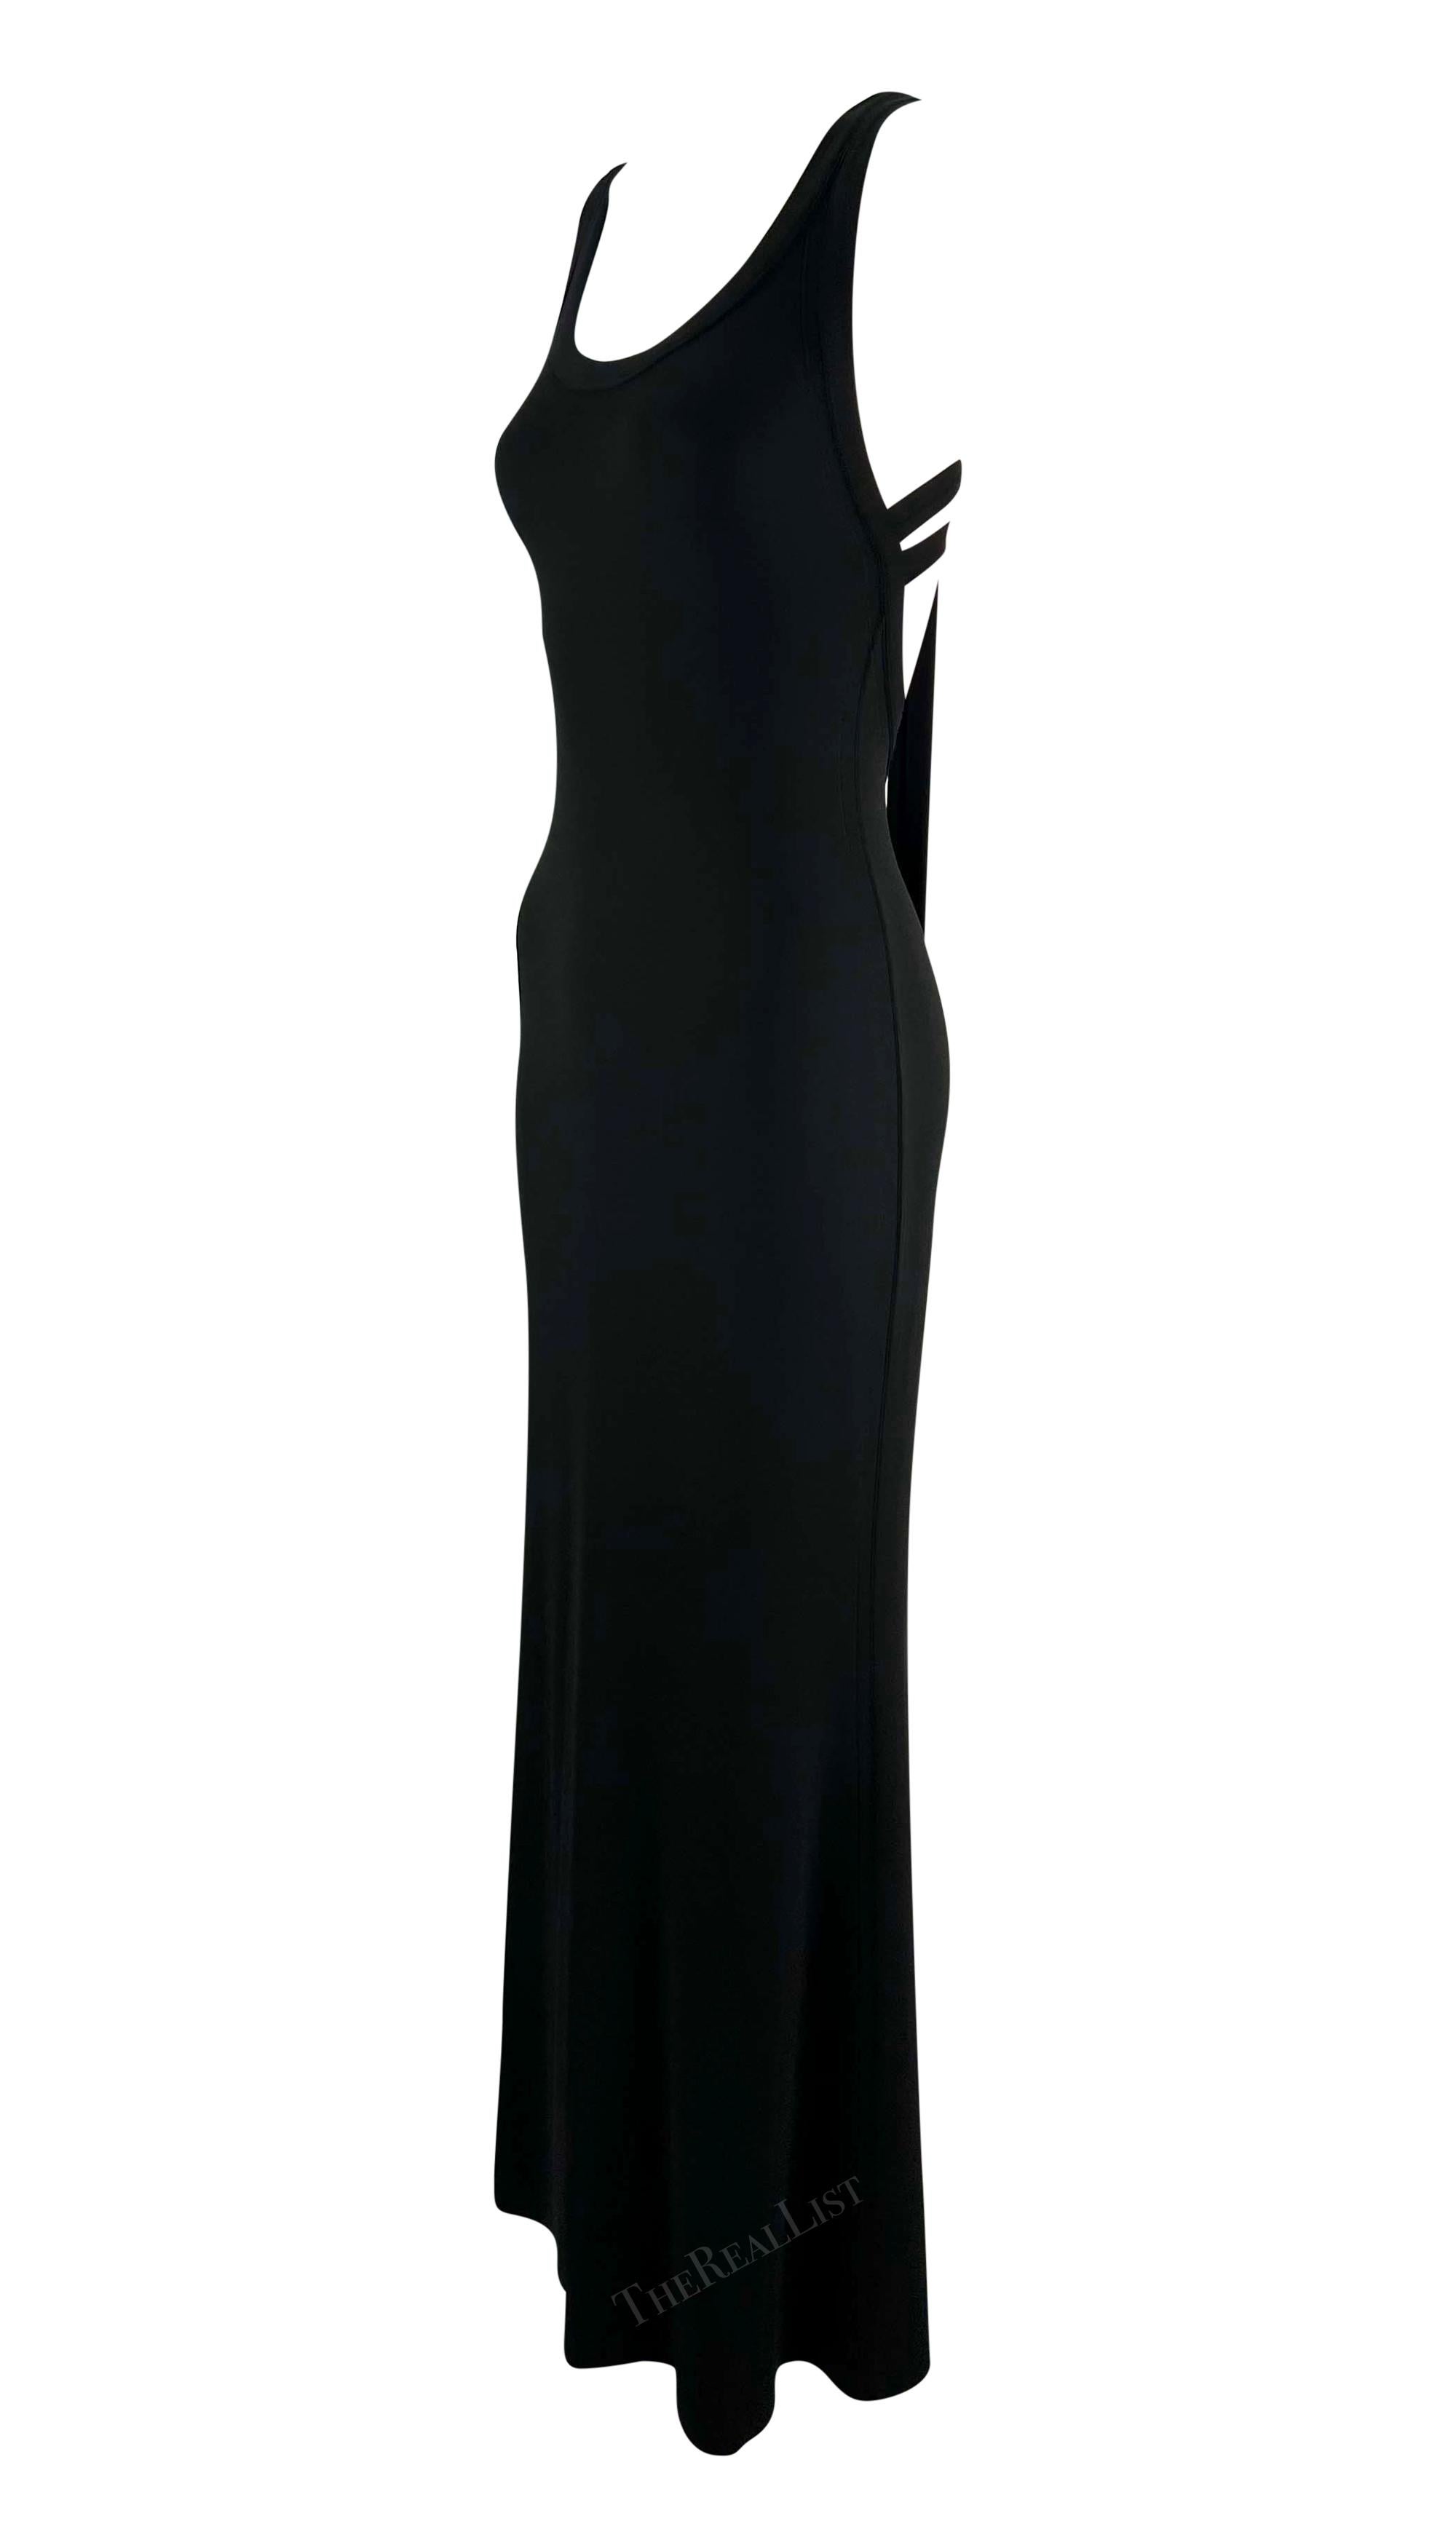 2000s Celine Black Stretchy Backless Bondage-Inspired Strap Gown For Sale 3